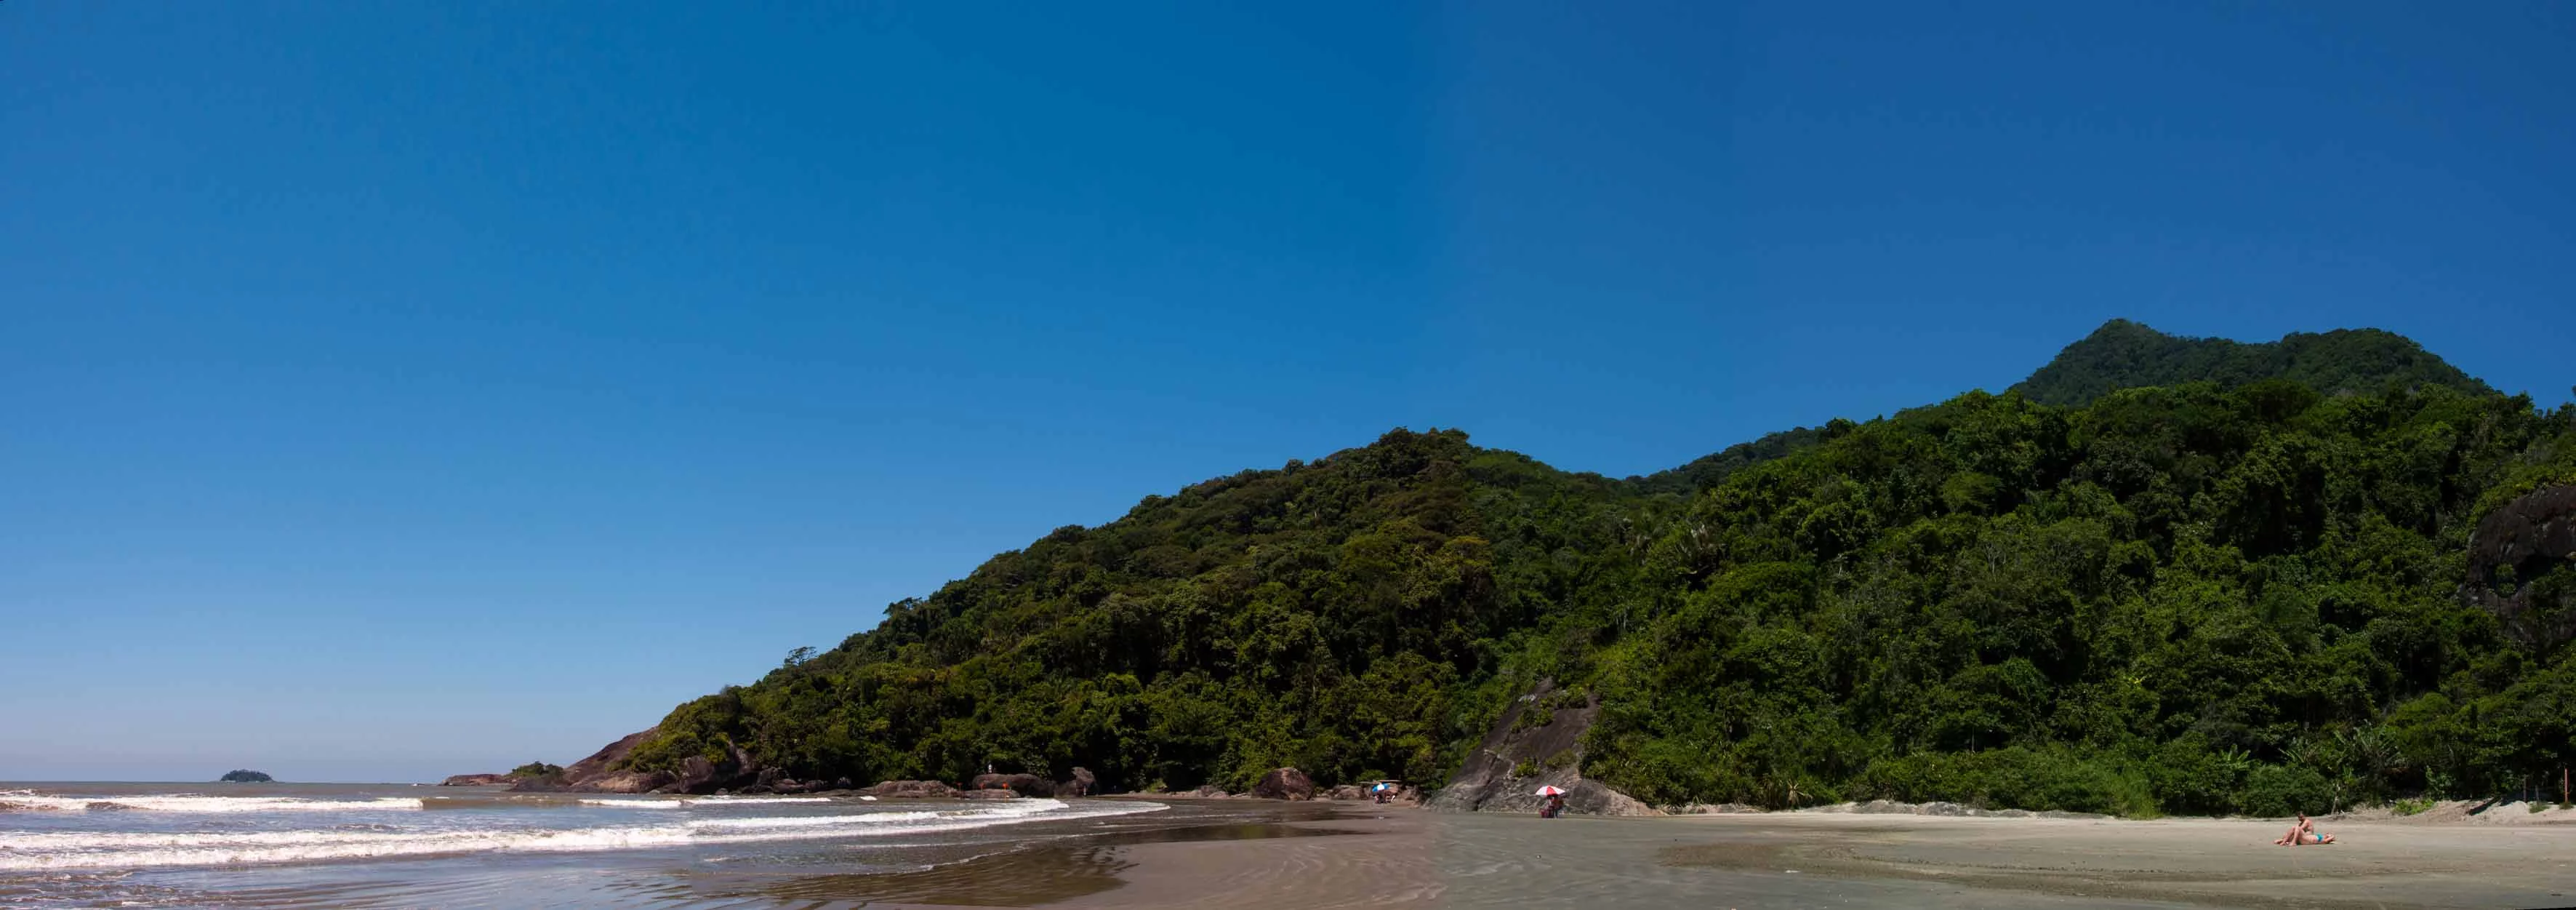 Peruíbe-Meio-Ambiente-Praia-do-Costao-bx